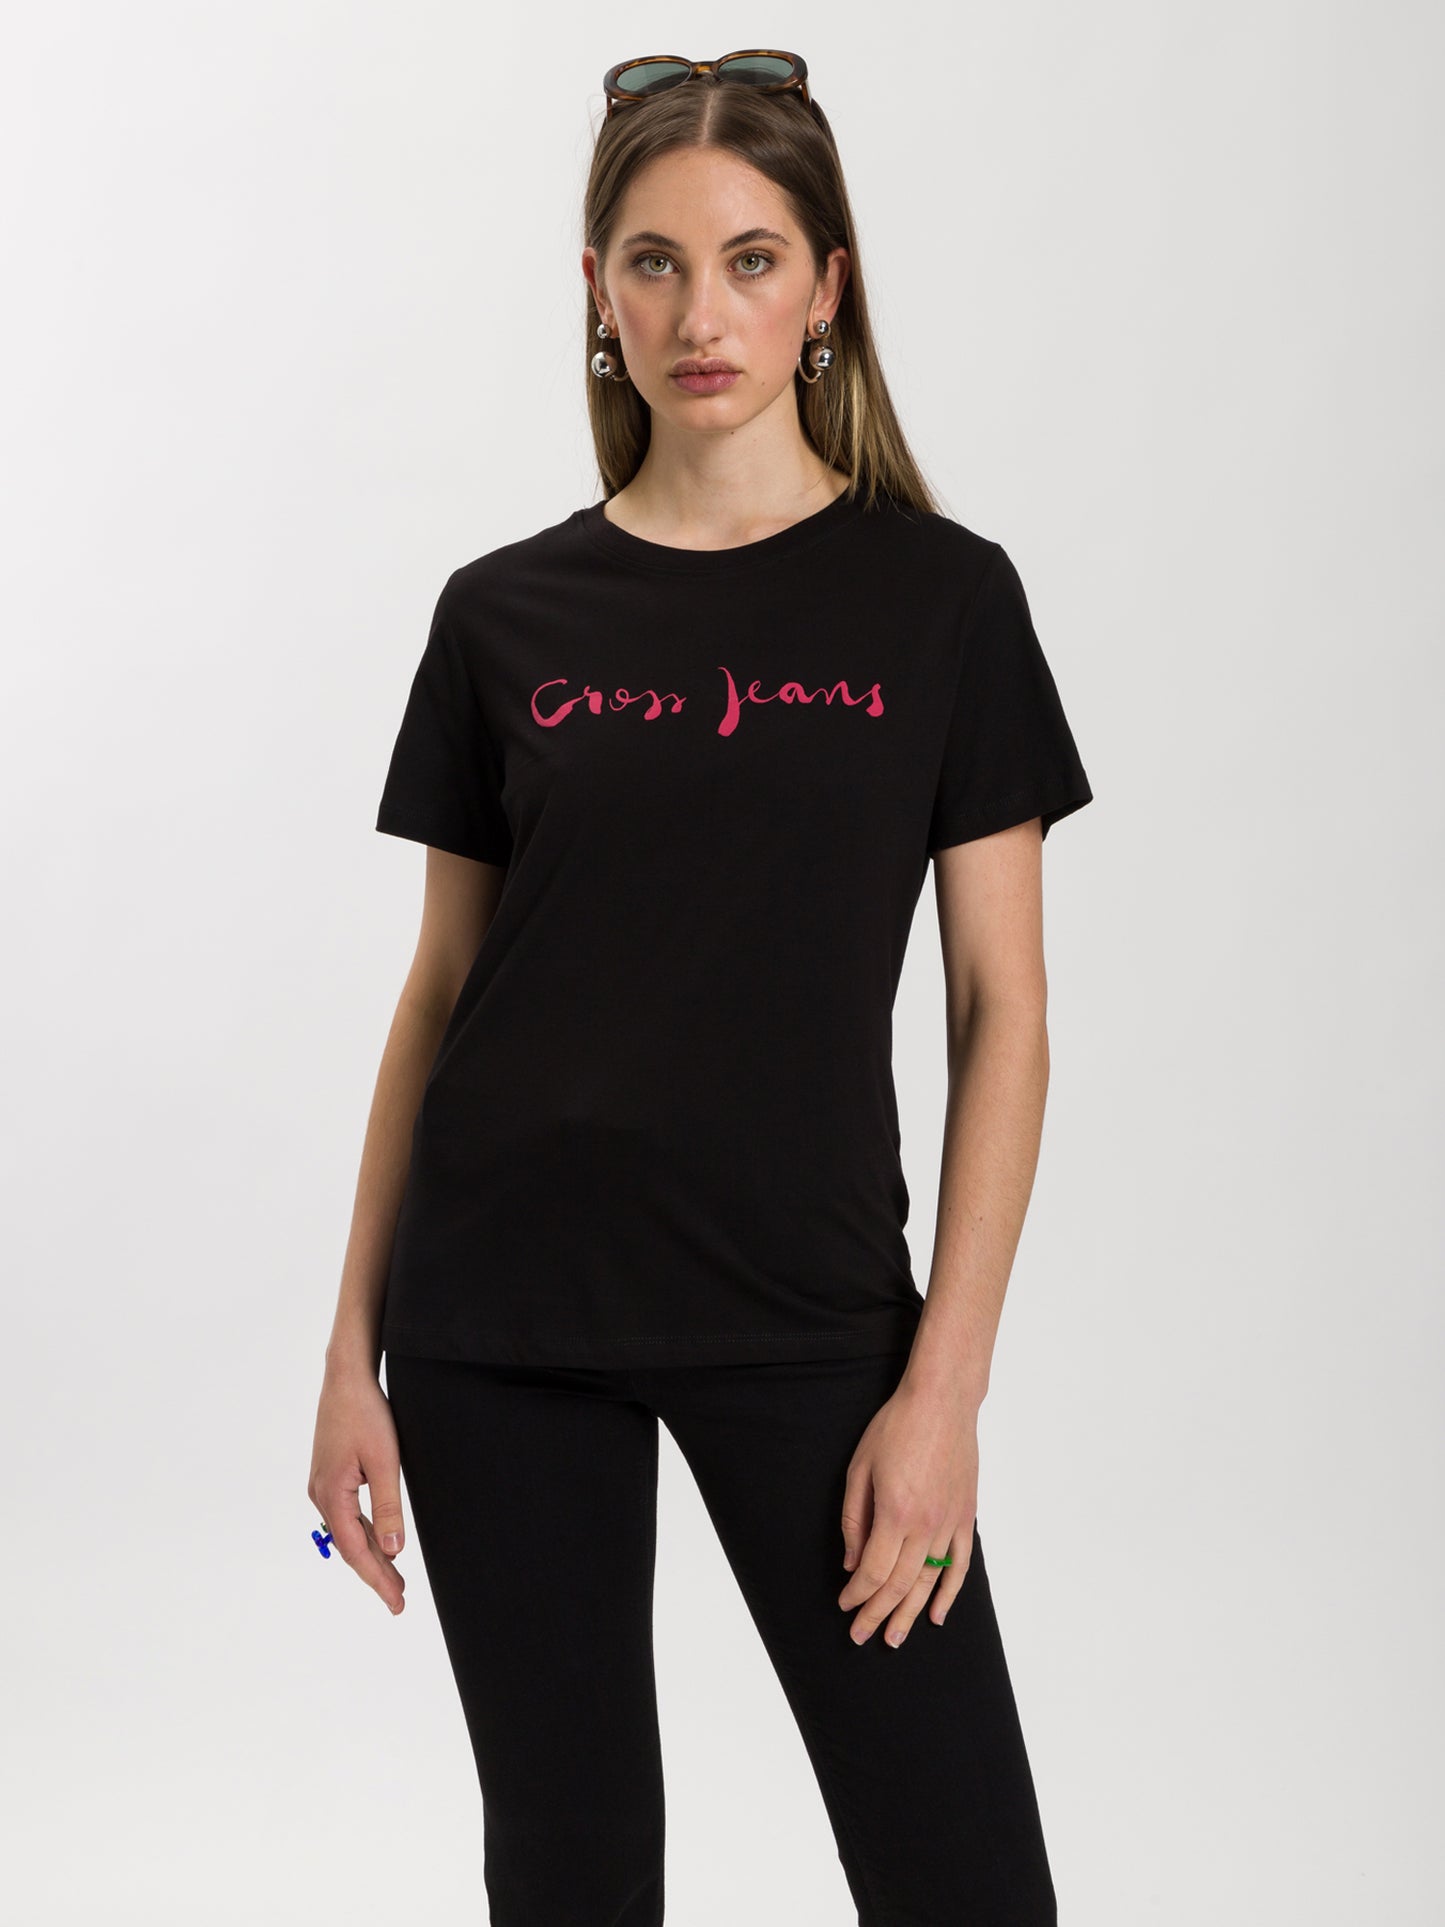 Women's regular T-shirt with Cross Jeans logo print black